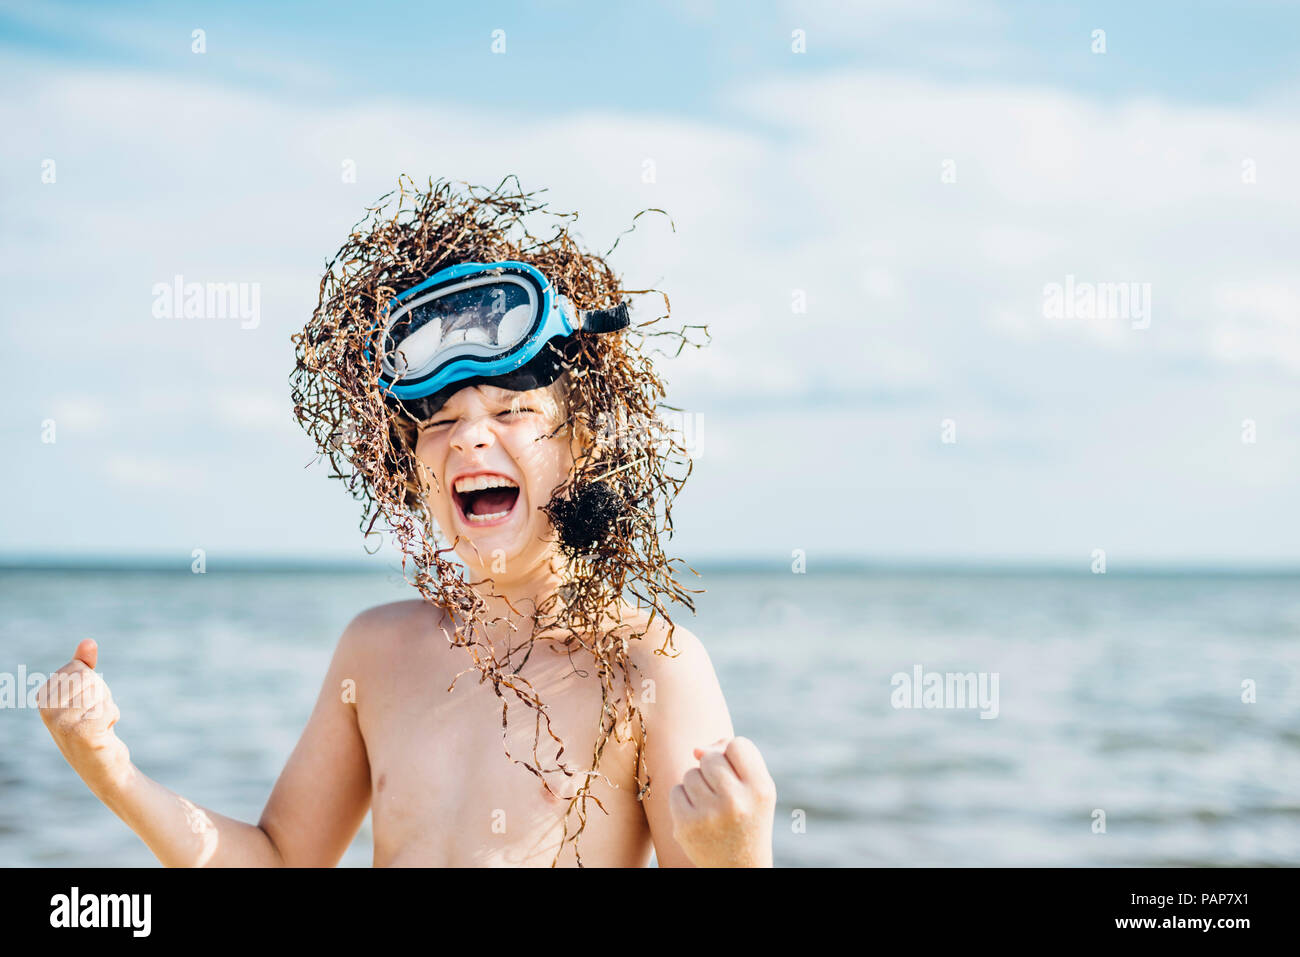 Carefree boy wearing seaweed wig on the beach Stock Photo